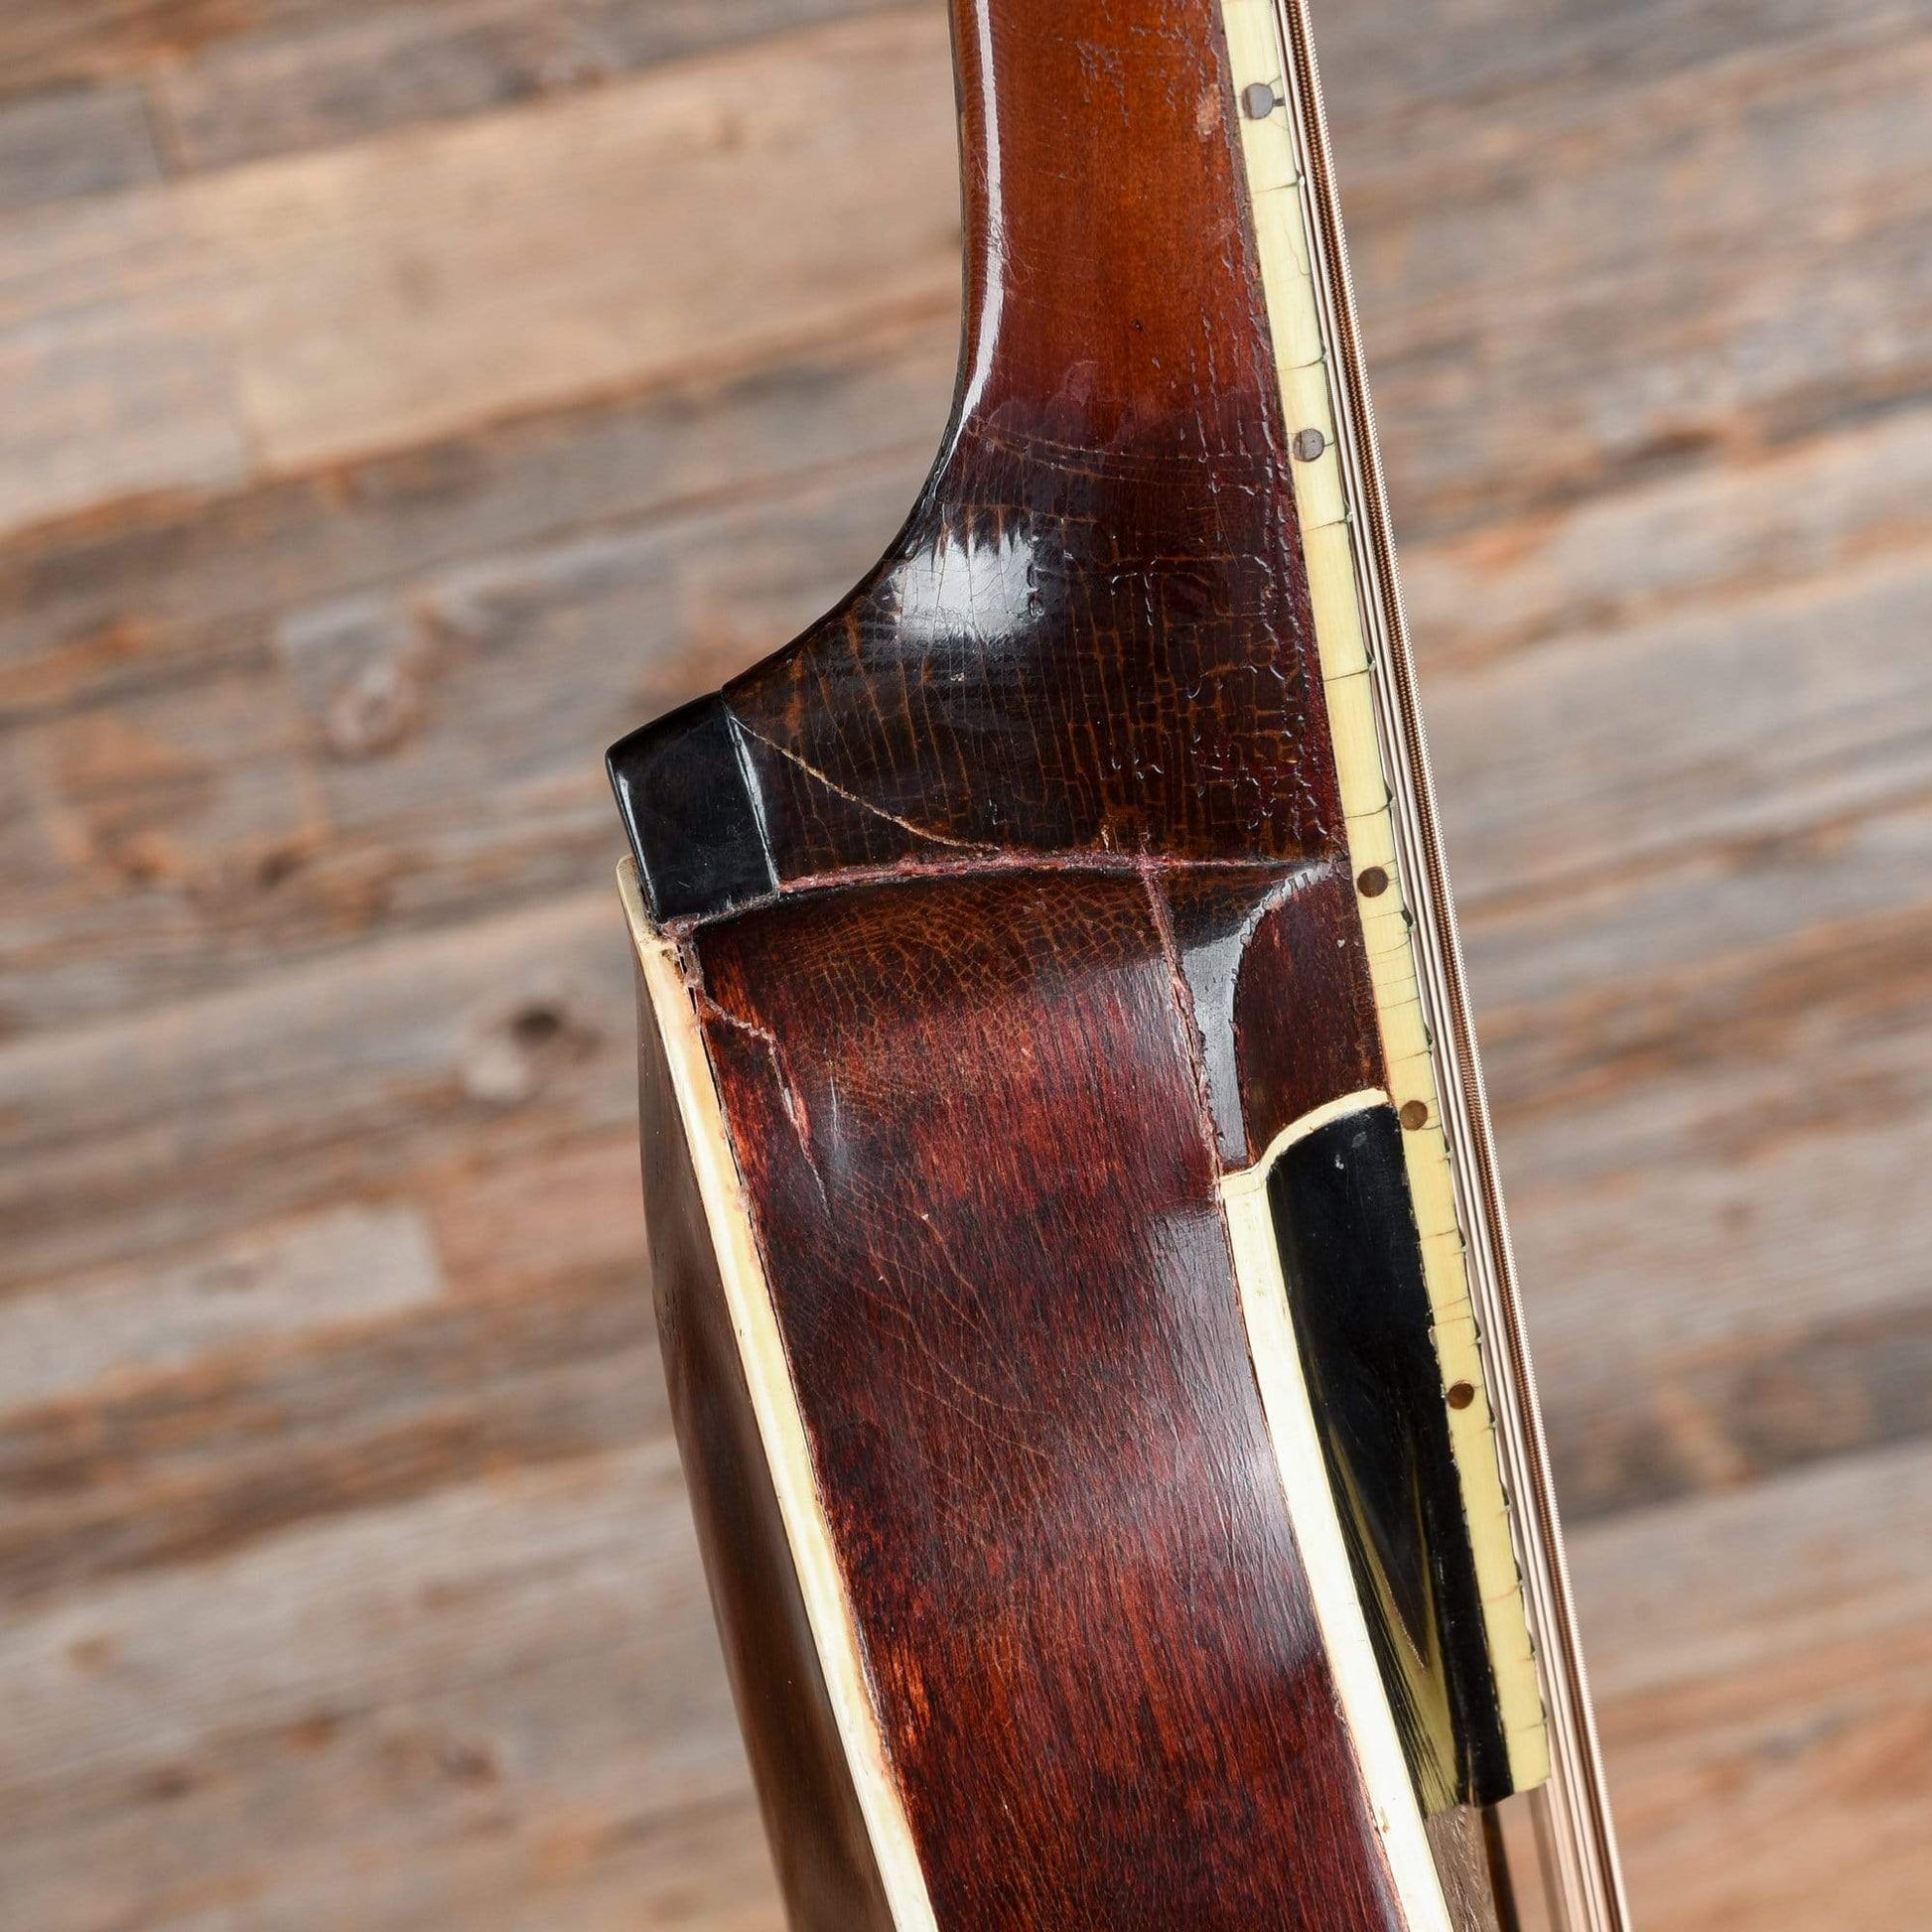 Gibson H-2 Mandola Black 1900s Folk Instruments / Mandolins